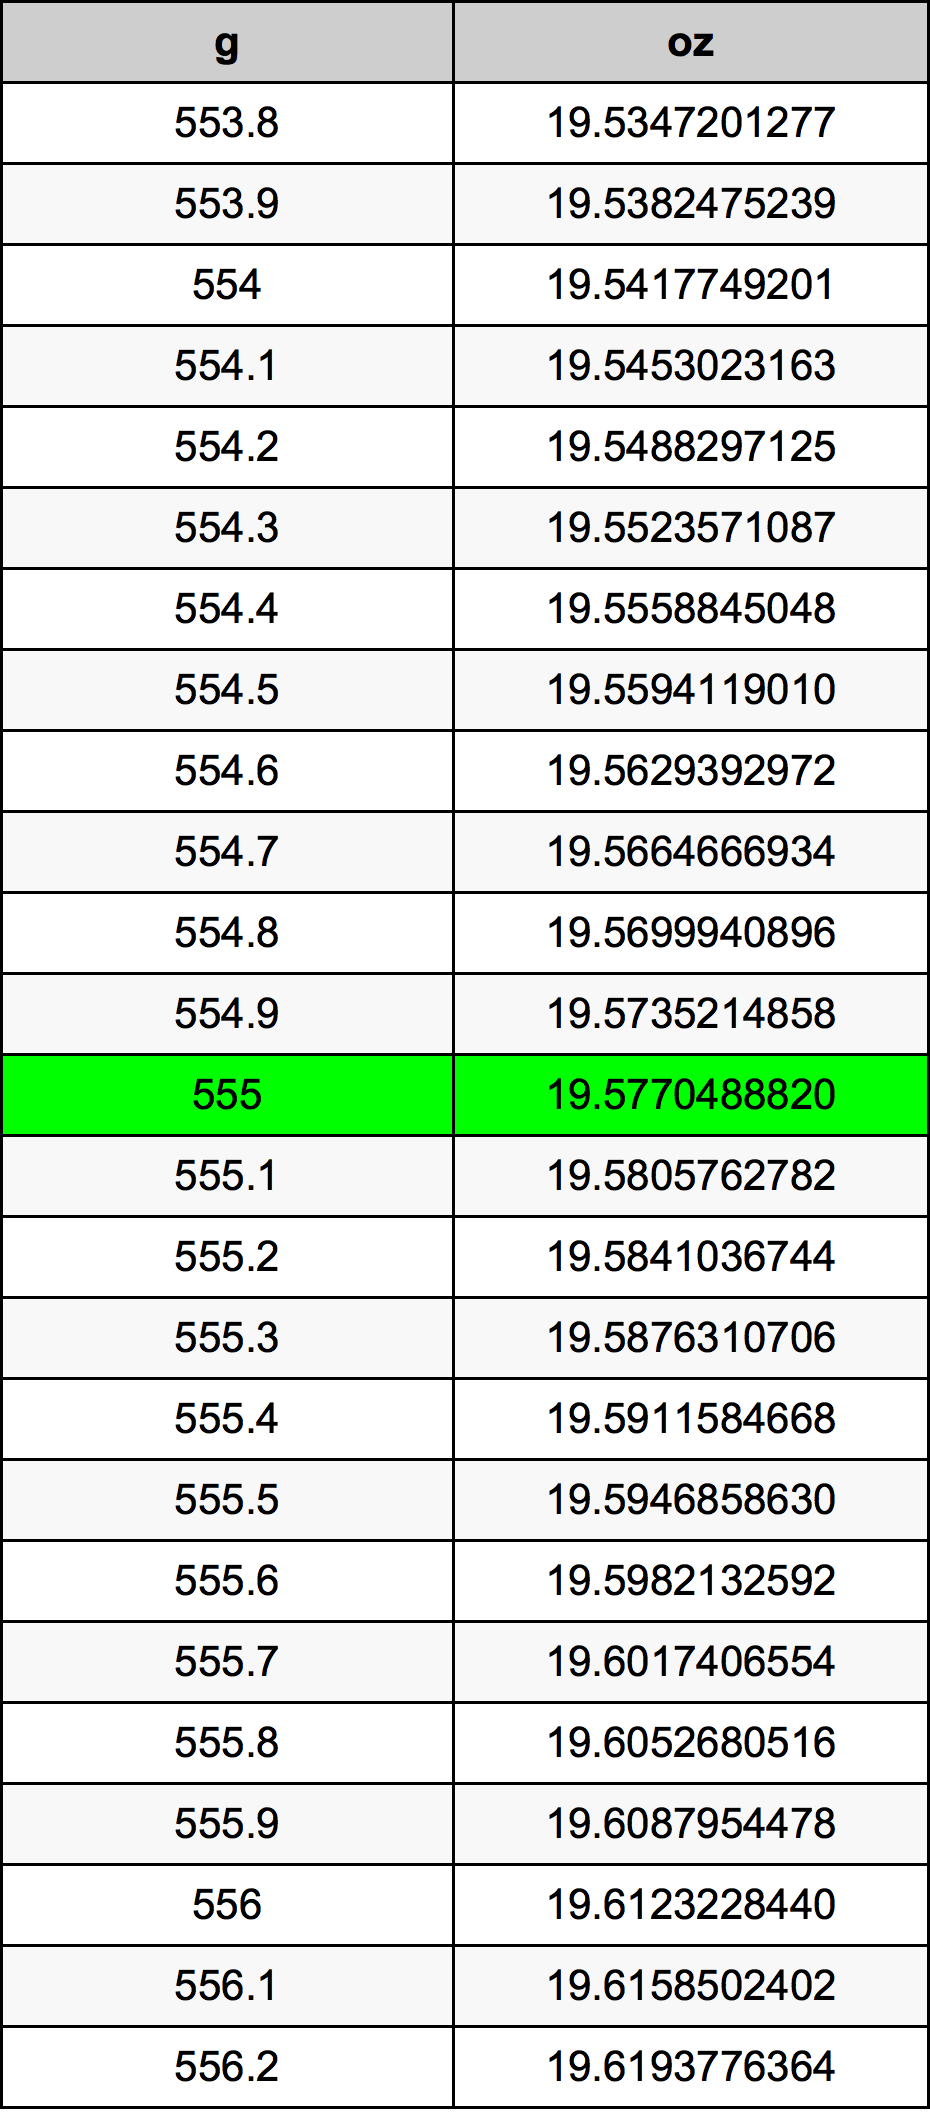 555 غرام جدول تحويل